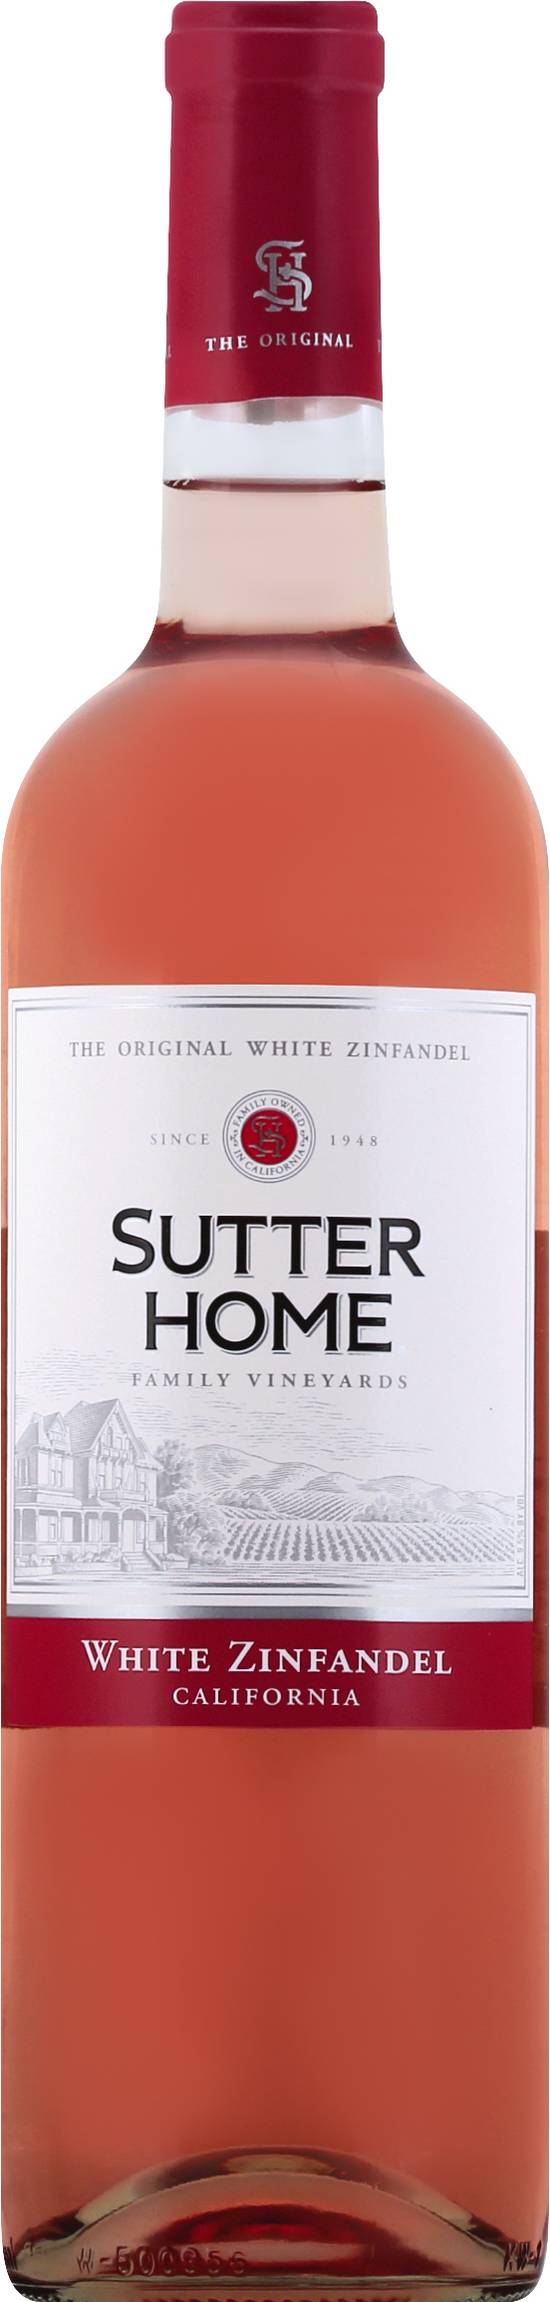 Sutter Home California Zinfandel White Wine 1948 (750 ml)